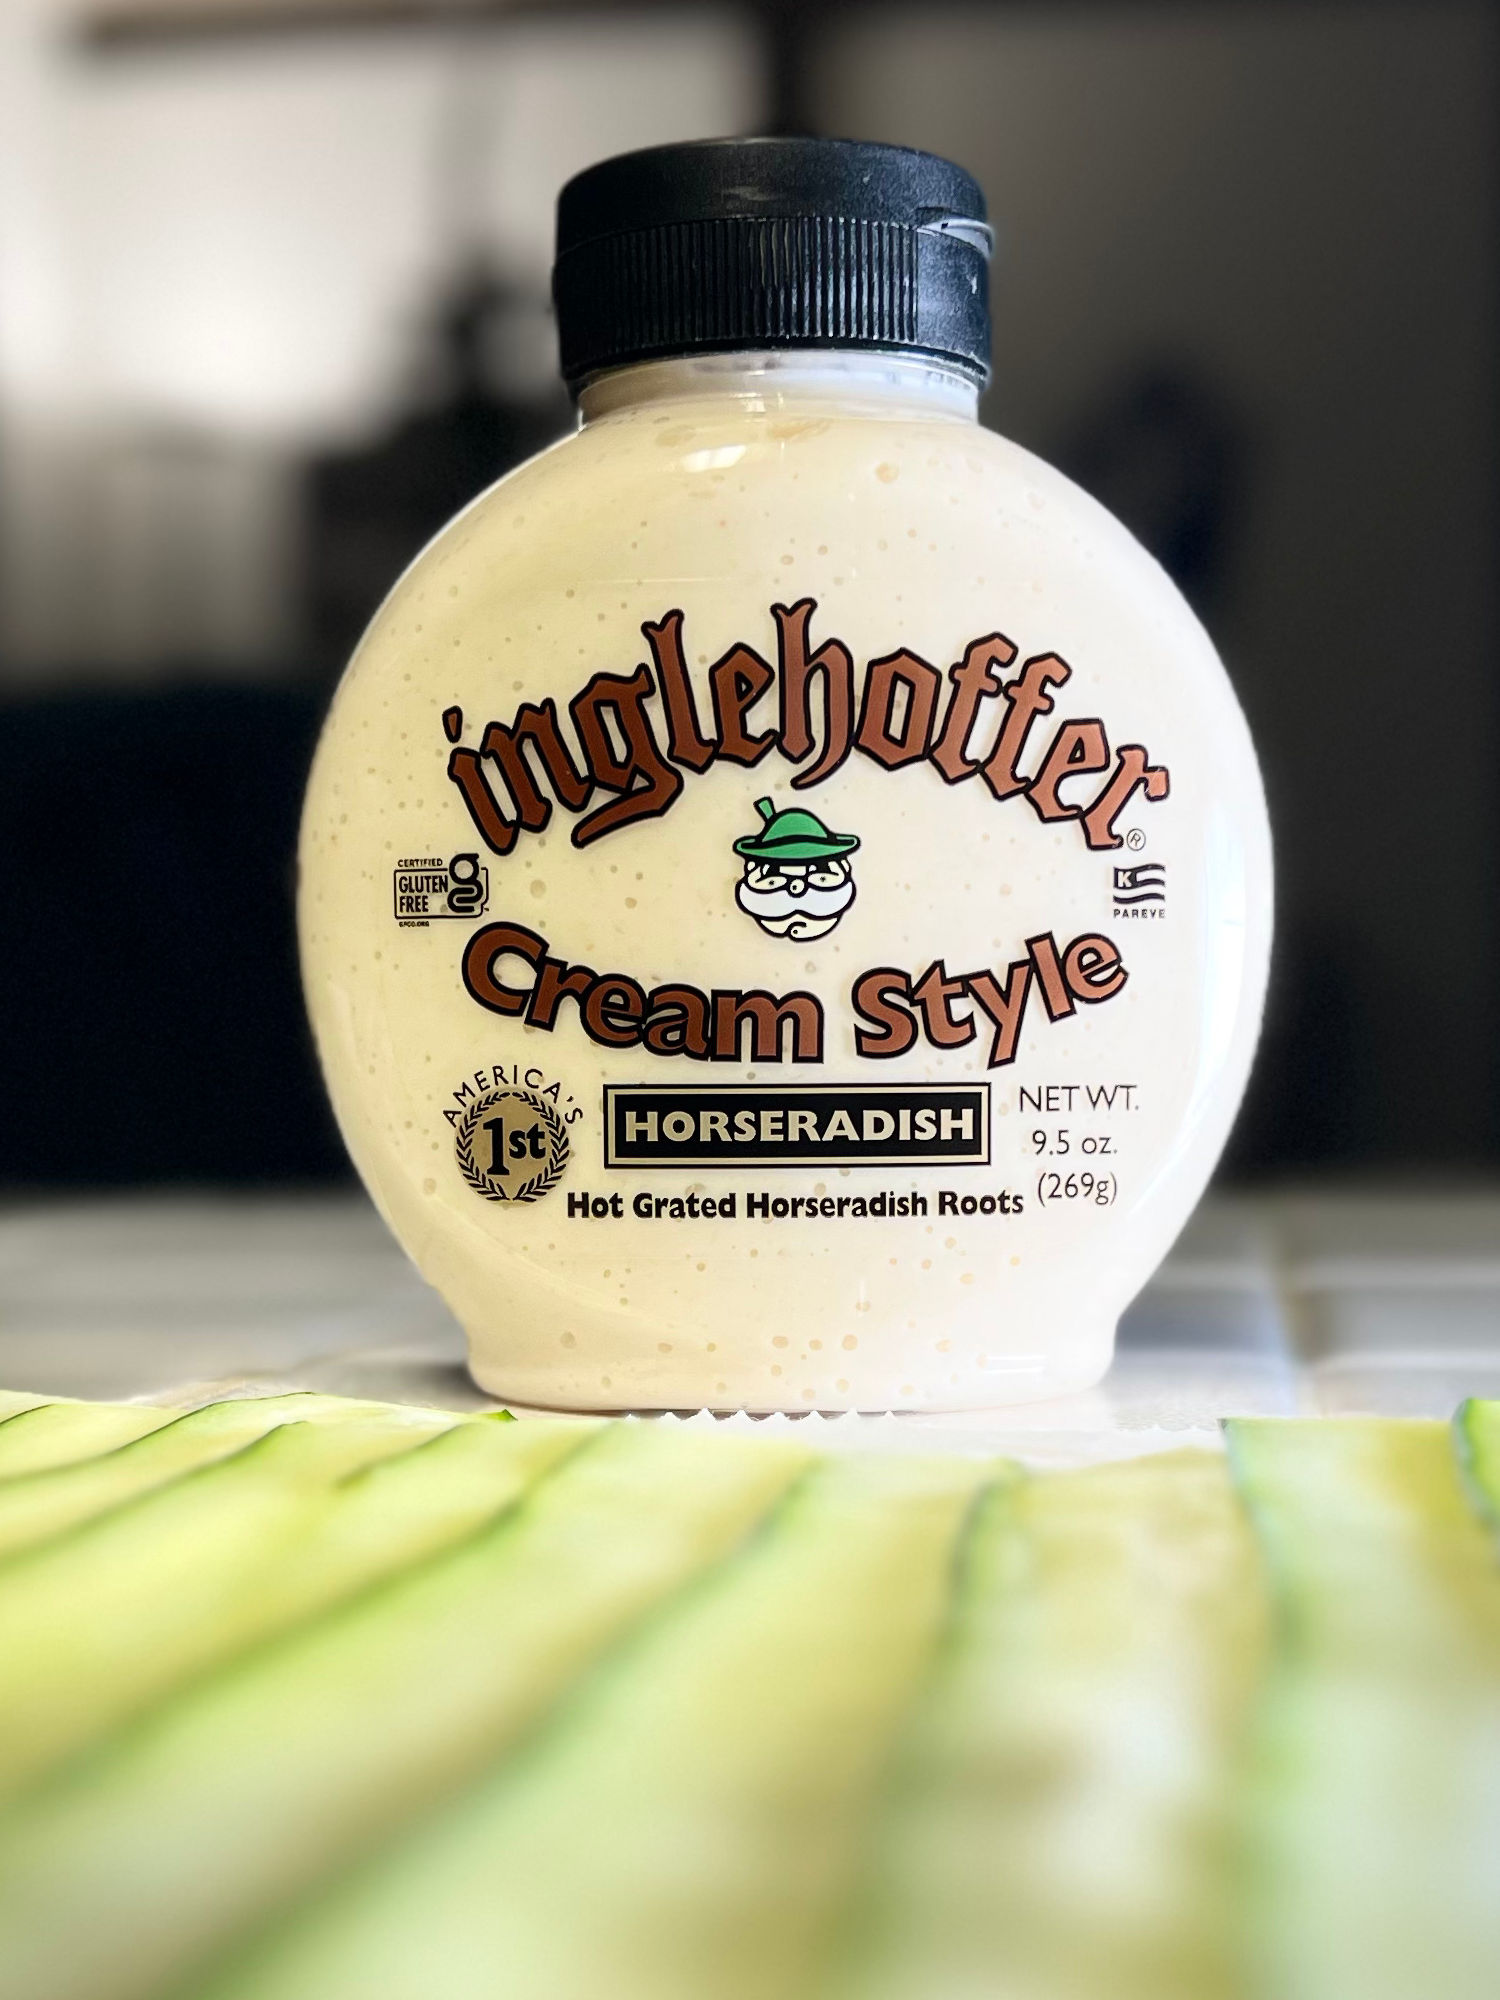 Inglehoffer Horseradish Cream Style